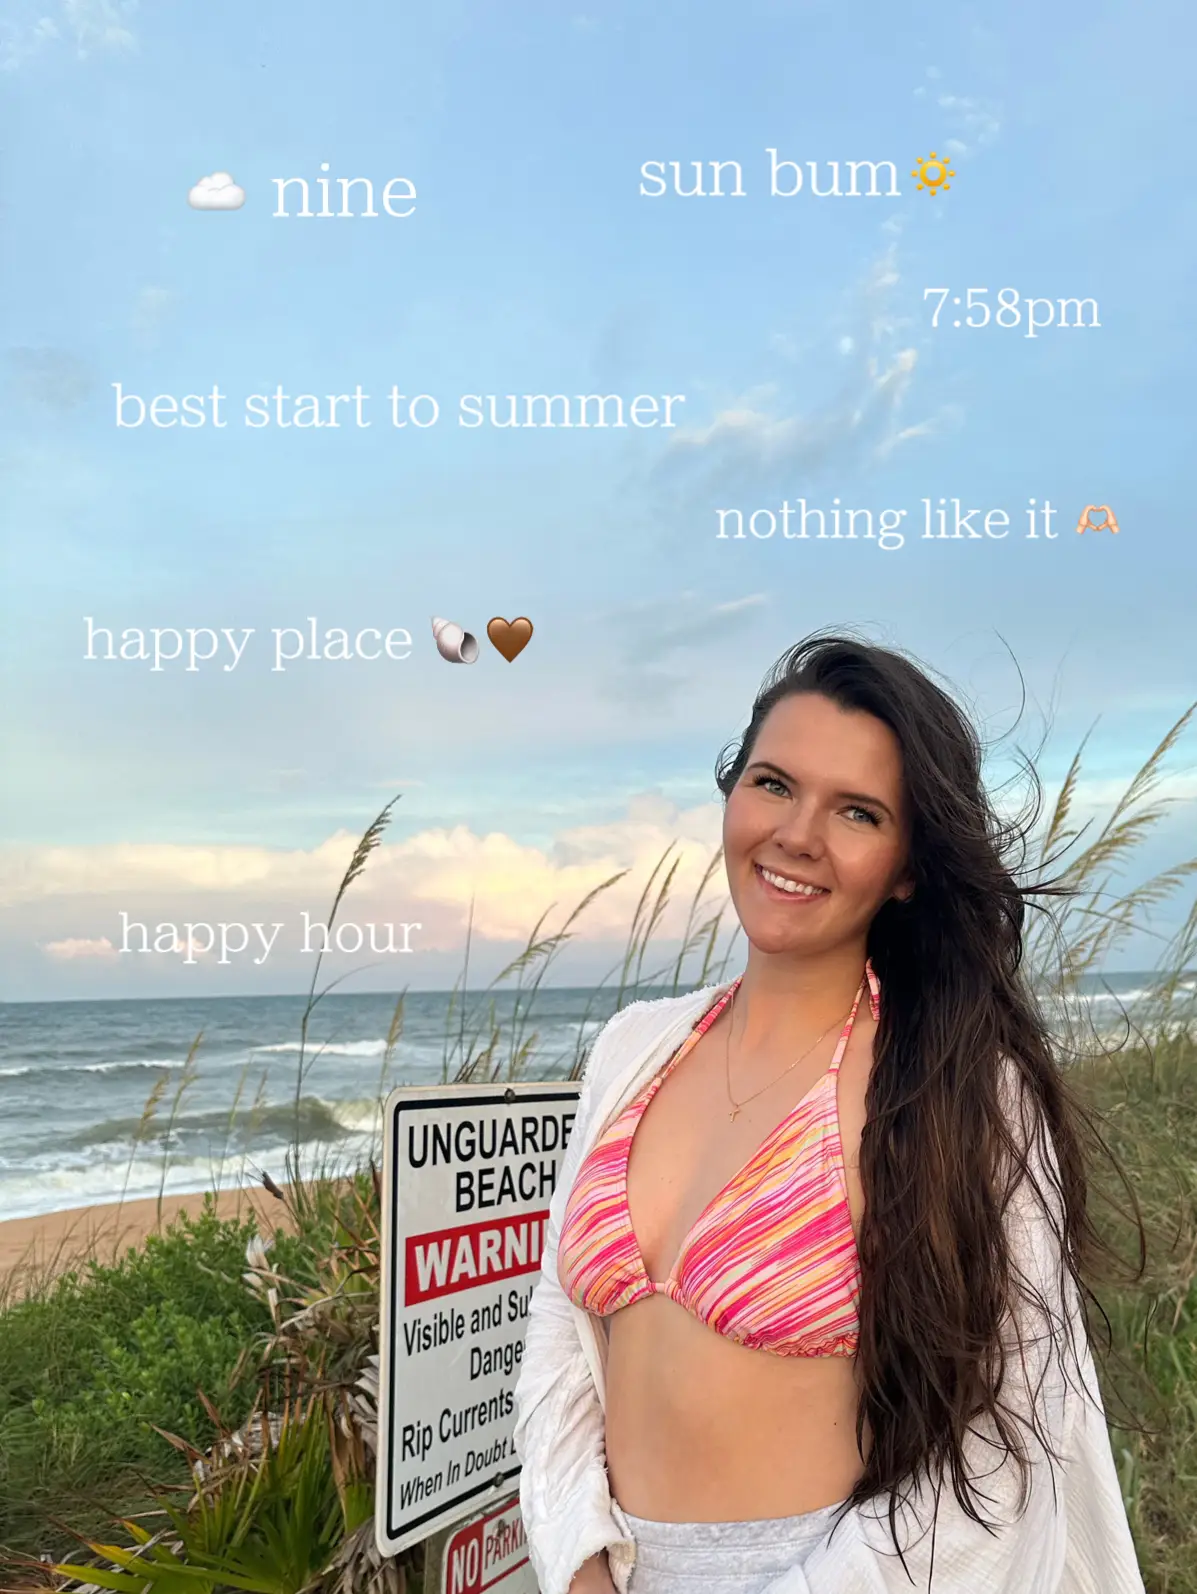 80 Best Beach Instagram Captions - Short, Funny Beach Captions